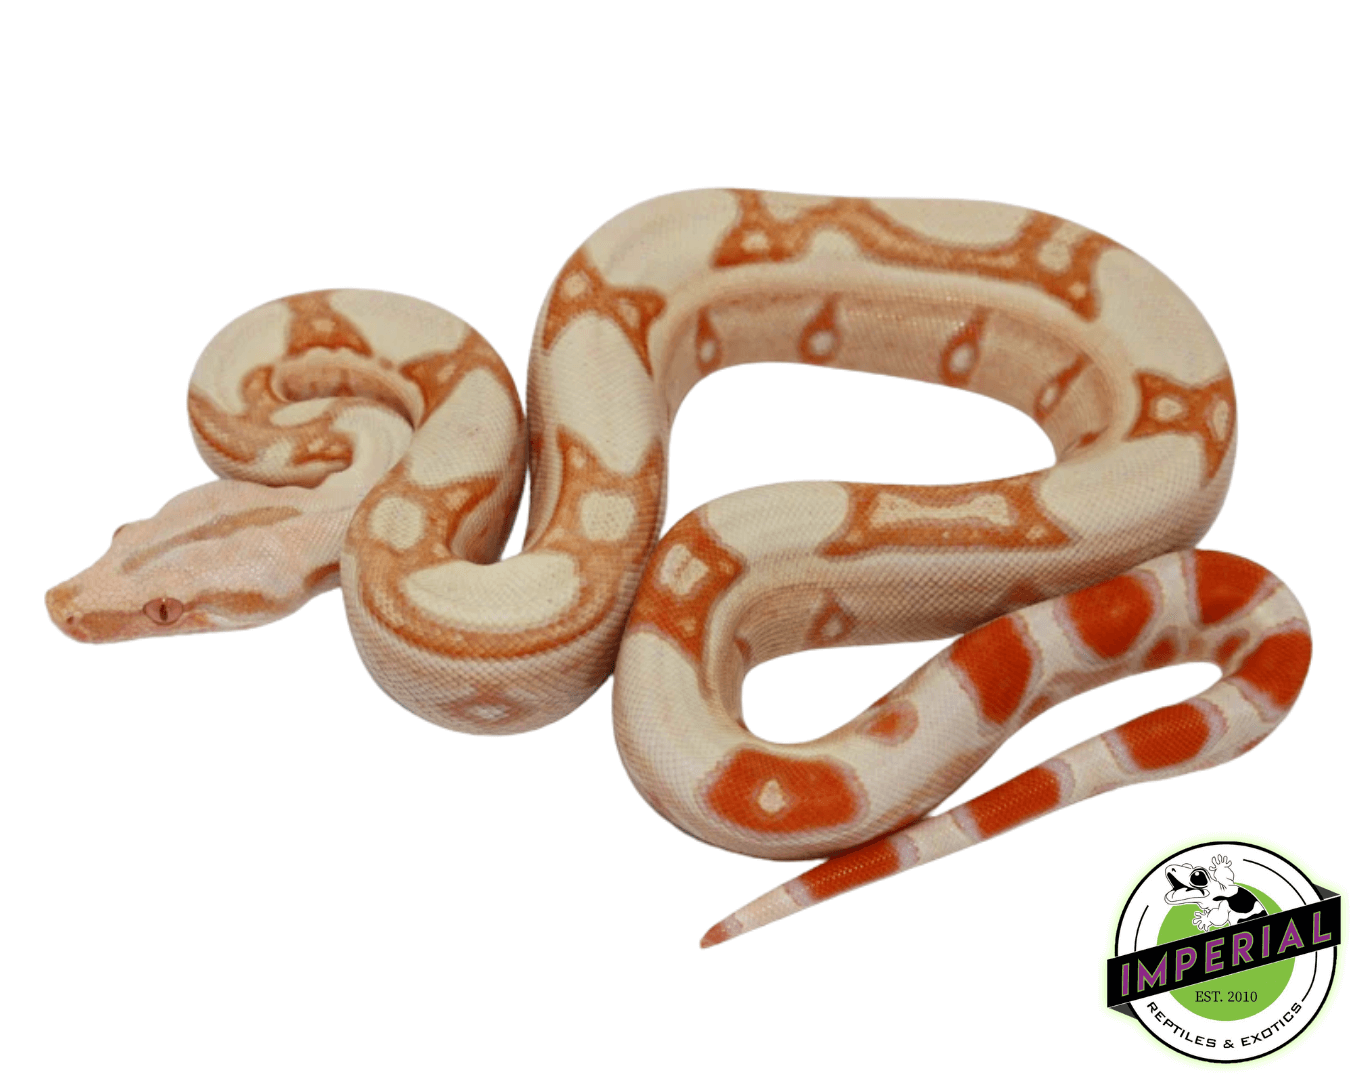 albino jungle colombian boa constrictor for sale, buy reptiles online